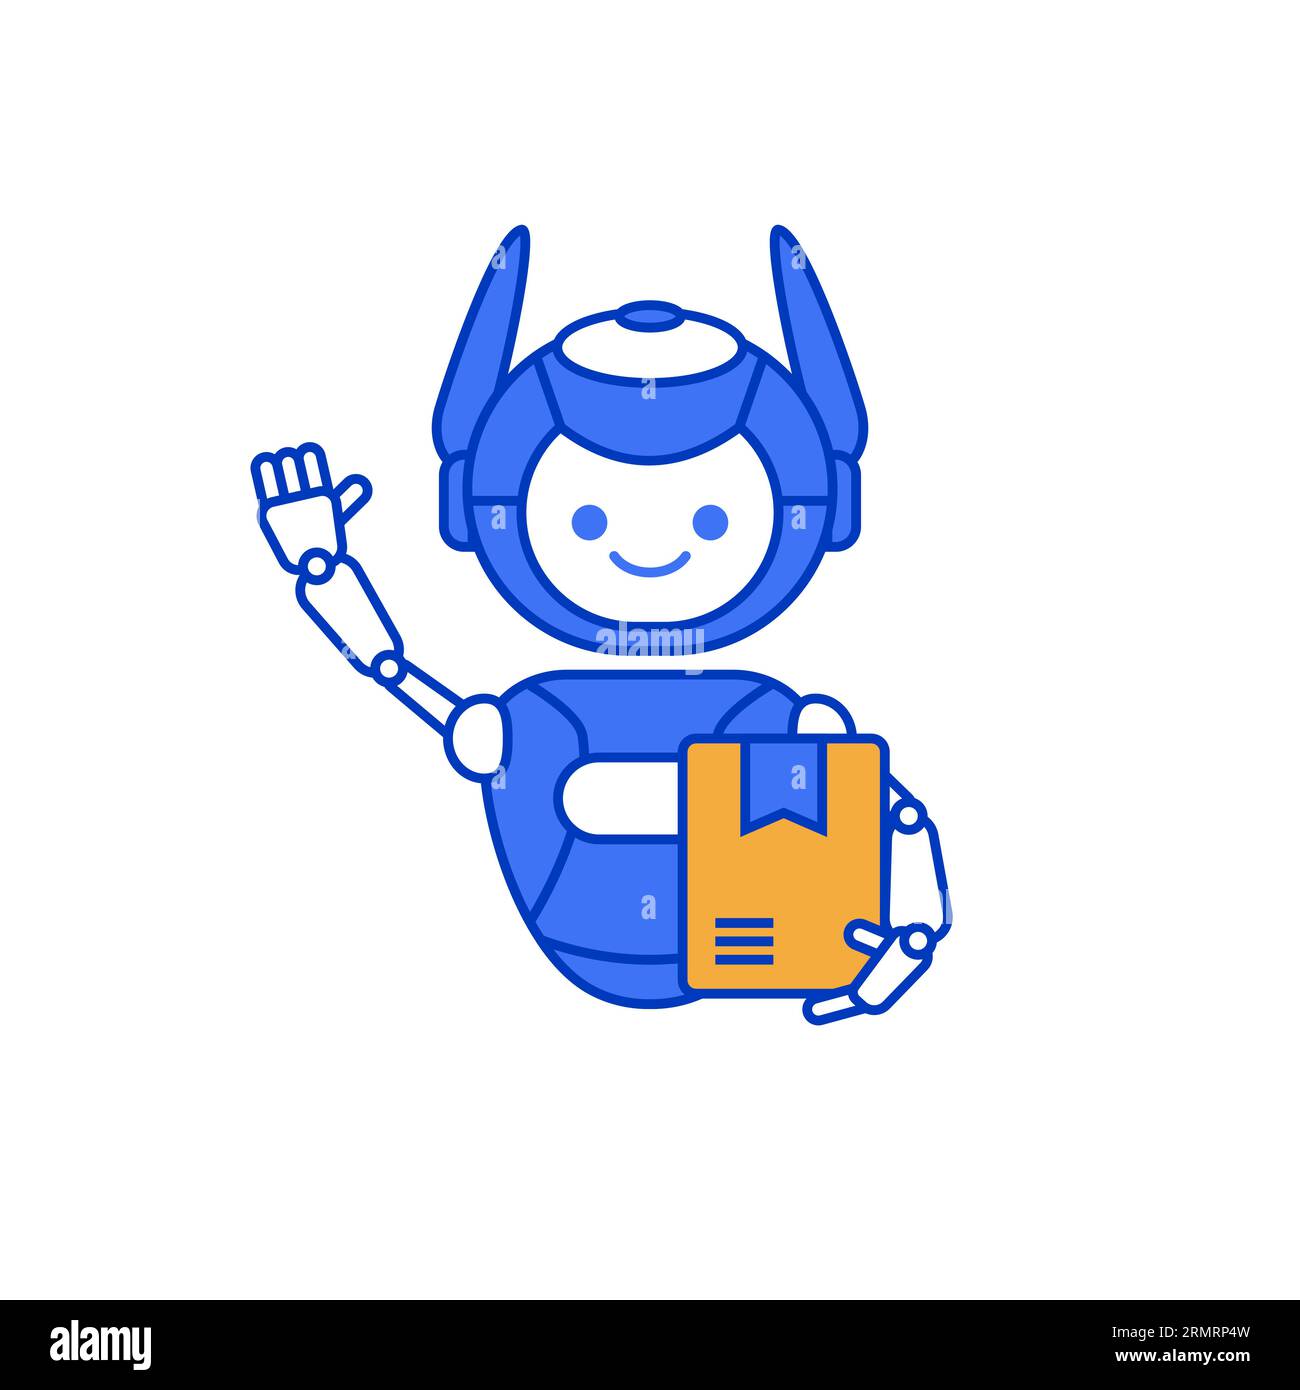 Robot mascot delivering package illustration. Robot carrying parcel. Stock Vector